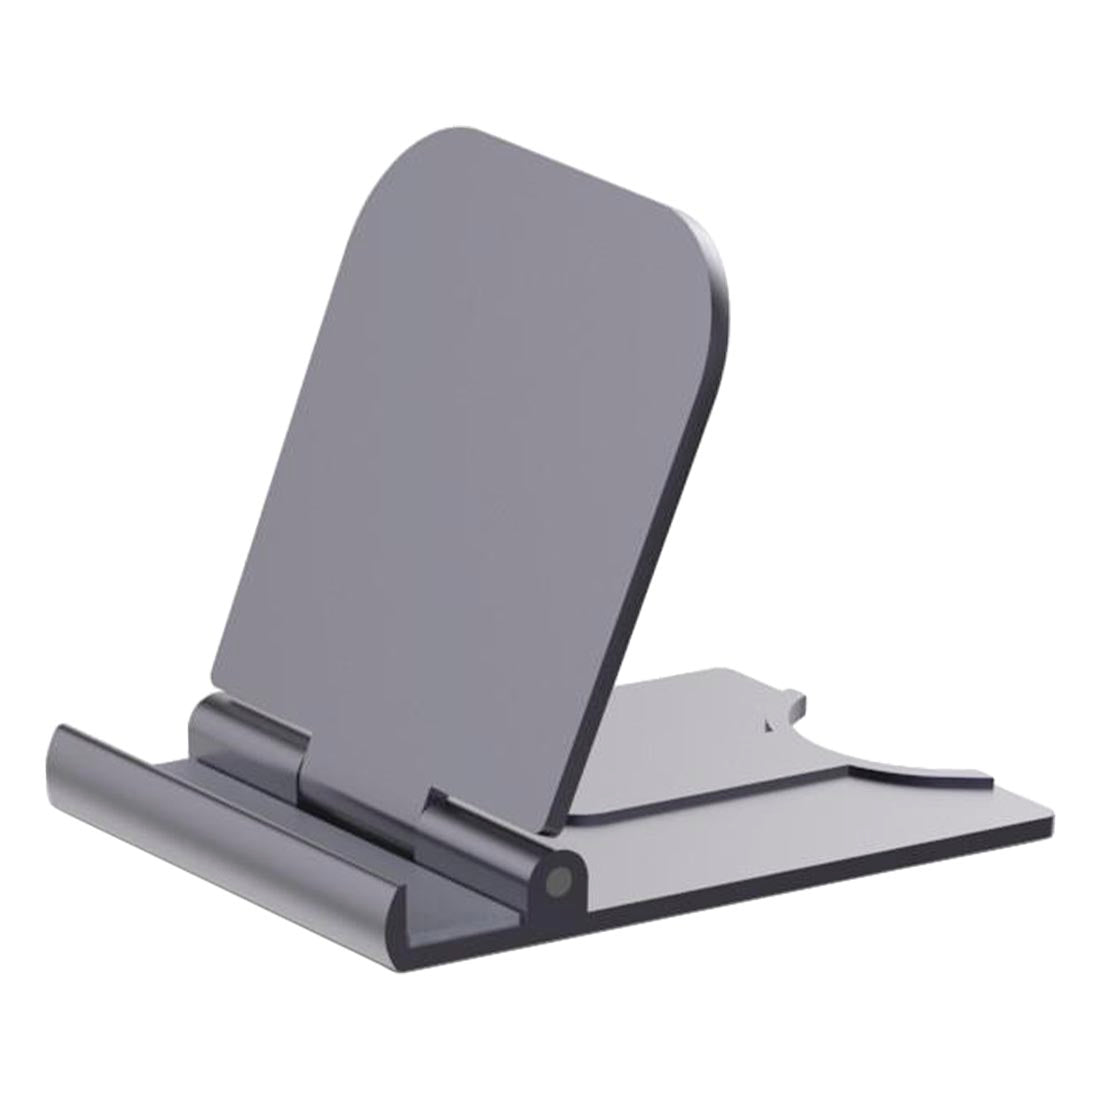 Portable Mini Mobile Phone Holder Foldable Desk Stand Holder 4 Degrees Adjustable Universal for iPhone Andorid Phone